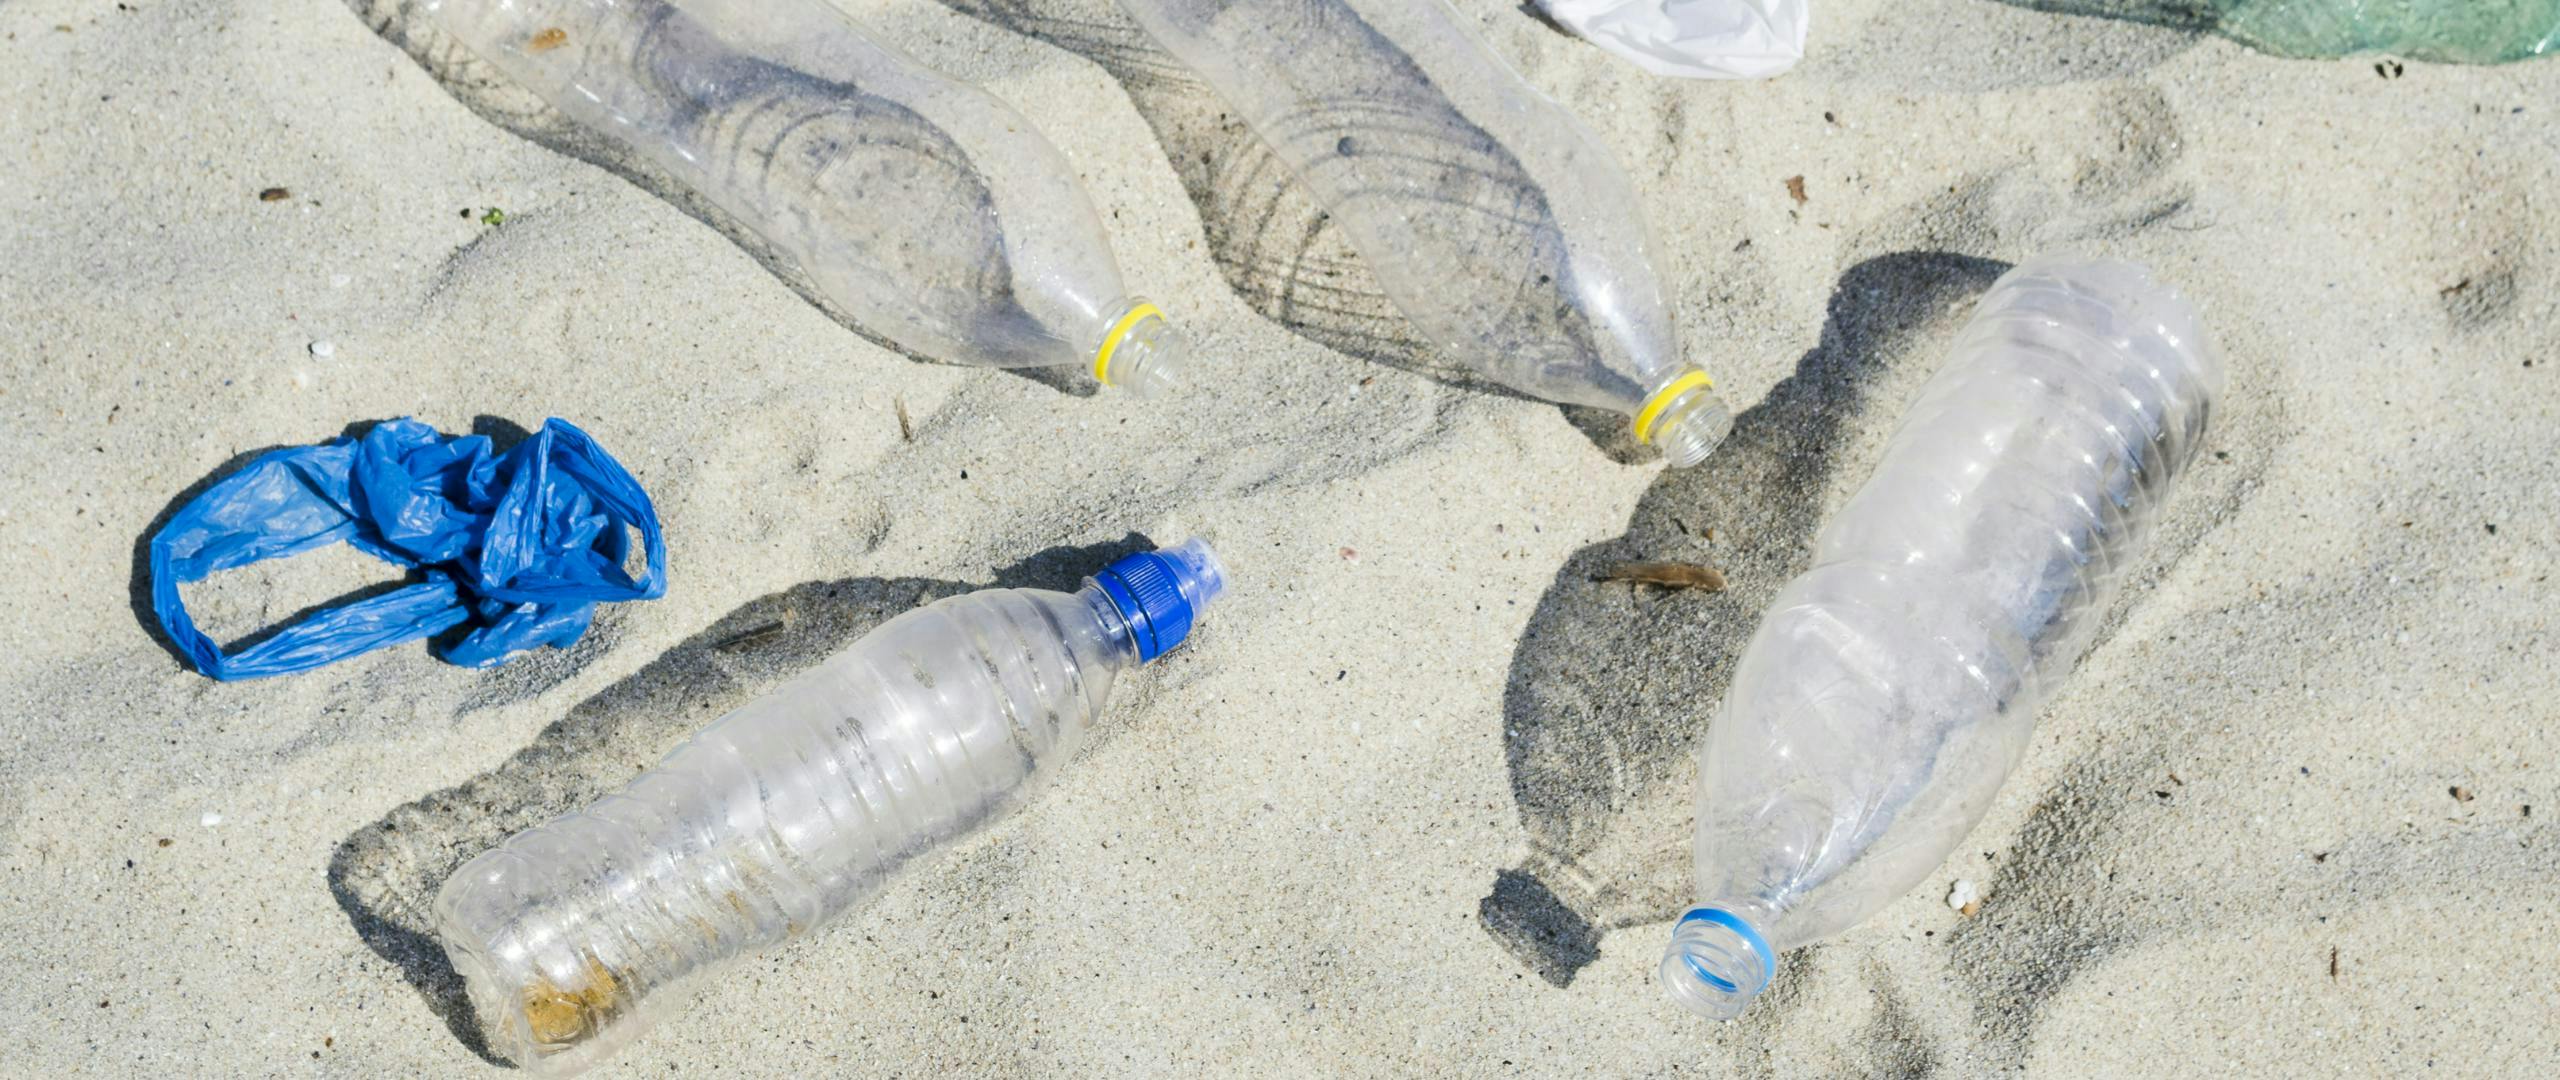 Plastic Water Bottle Waste | Environmental Impact 